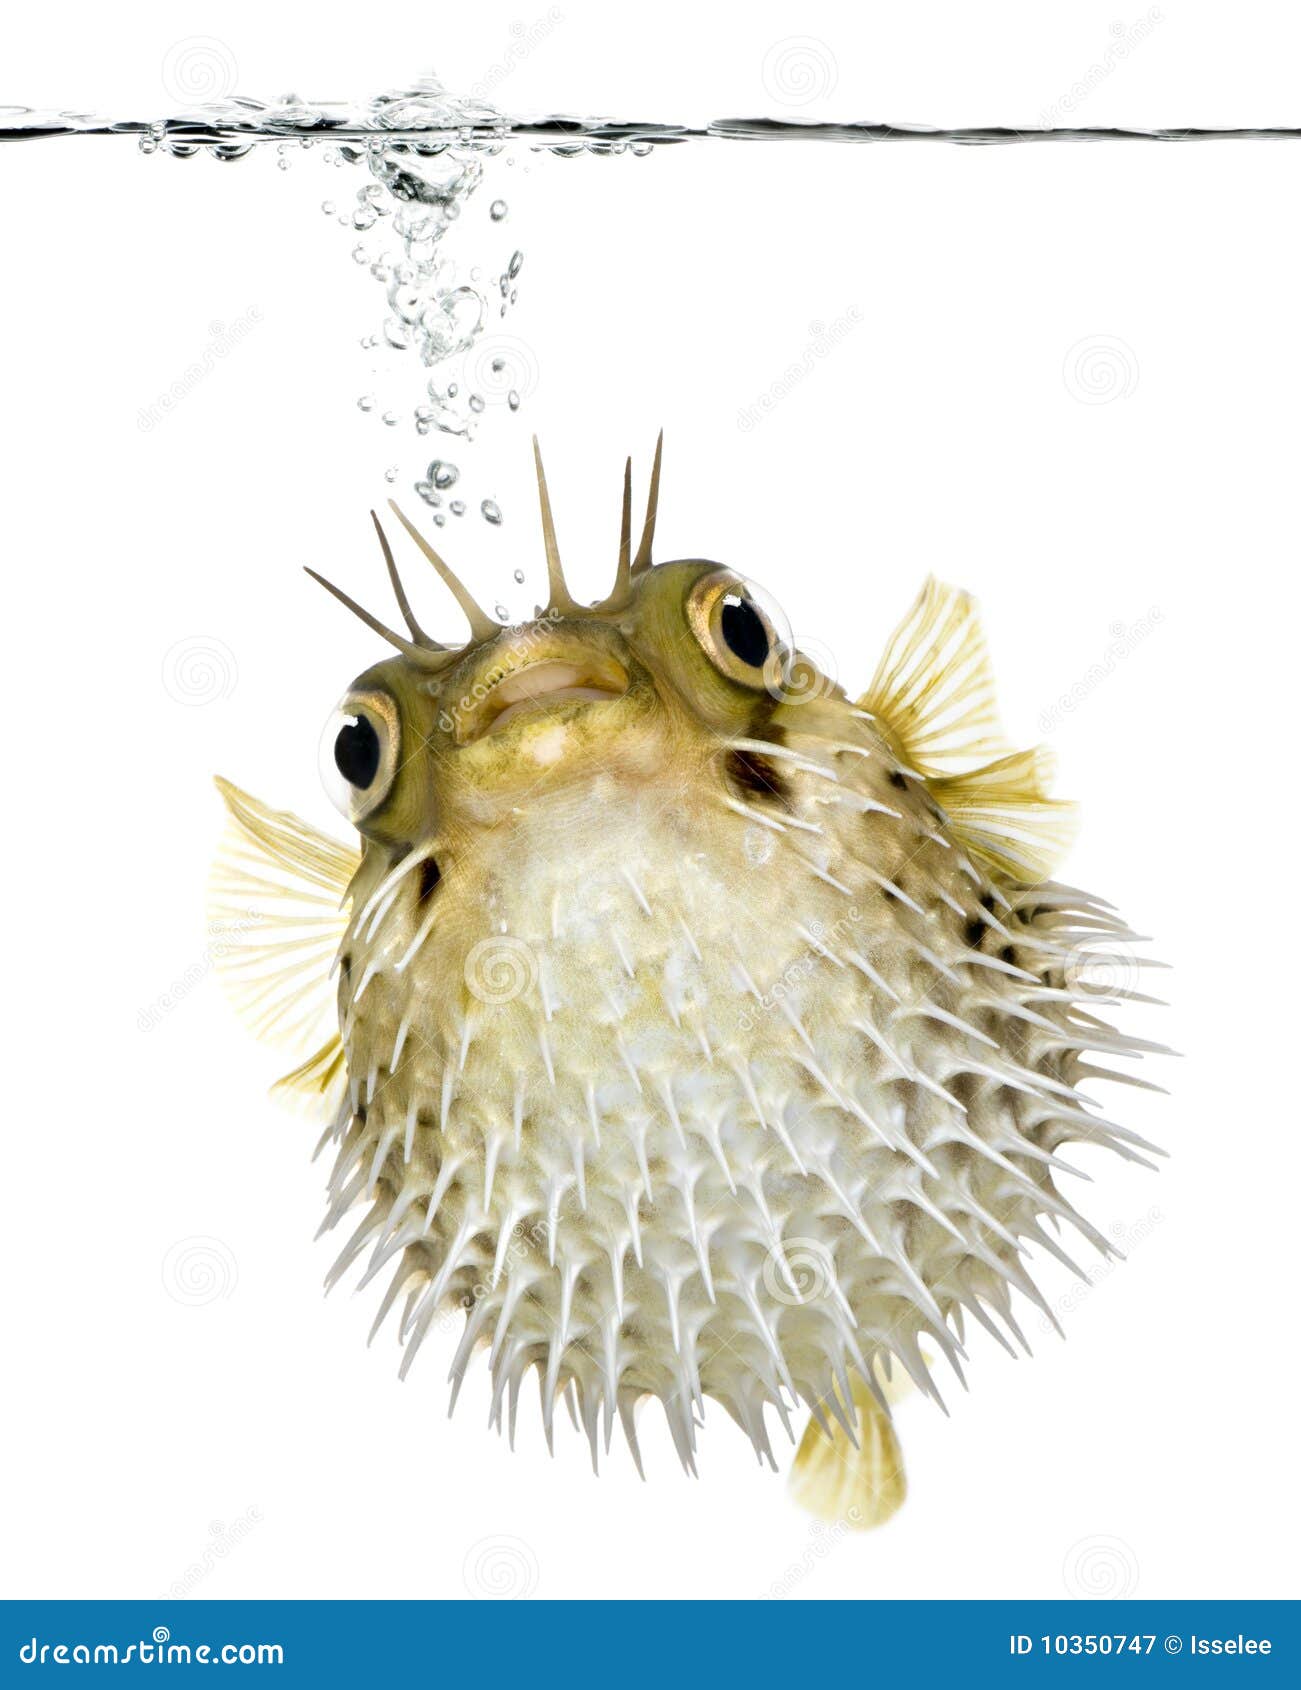 https://thumbs.dreamstime.com/z/long-spine-porcupinefish-fish-10350747.jpg